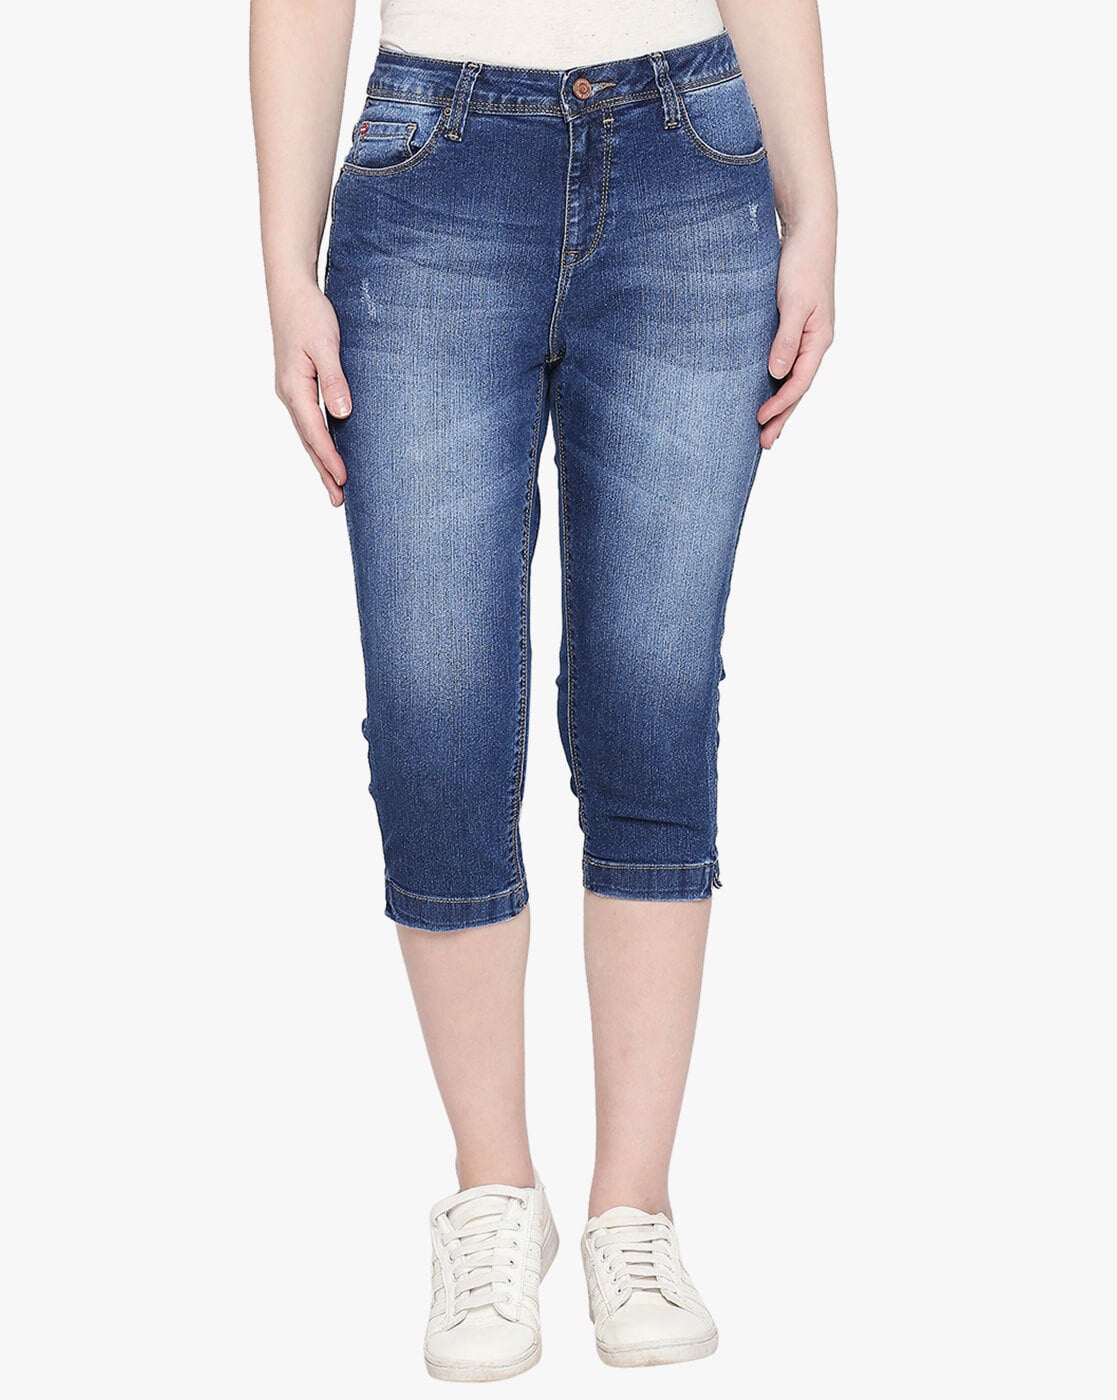 Buy Indigo Jeans & Jeggings for Women by LEE COOPER Online